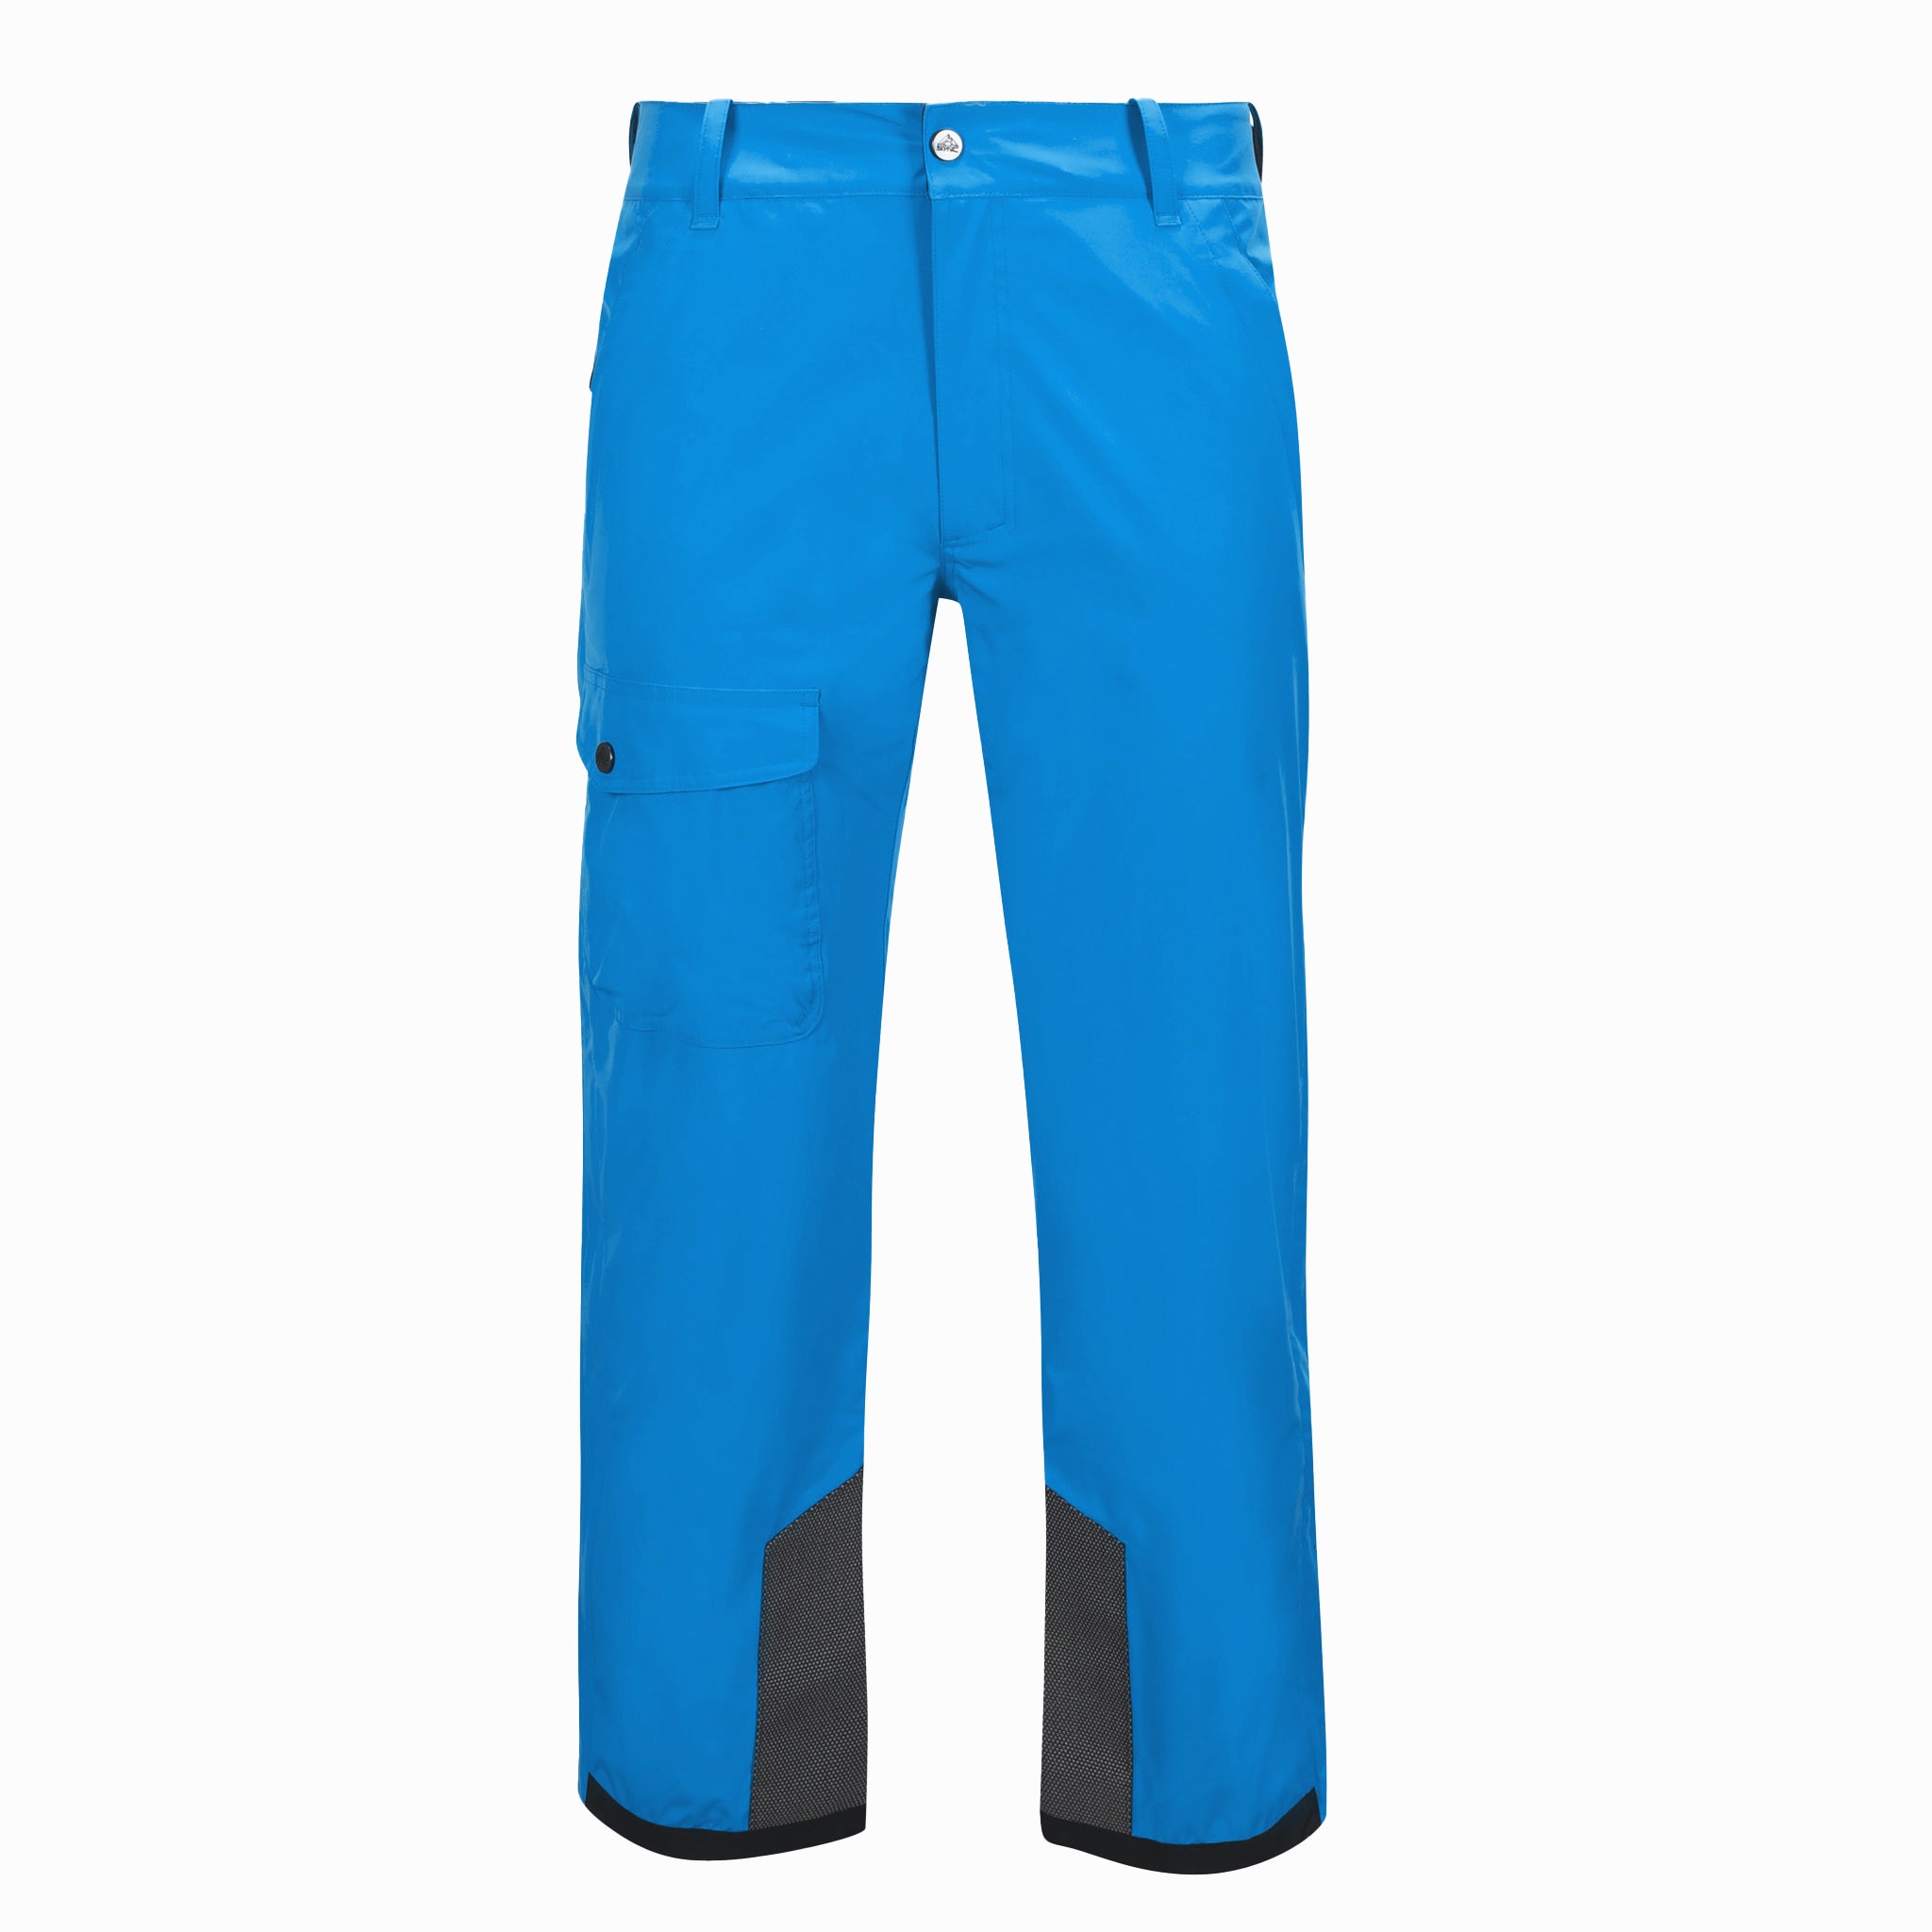 Aayomet Sweatpants For Men Mens Fashion Striped Sweatpants - Casual Skinny  Trousers Slim-fit Jogger Sport Pants,Black XL